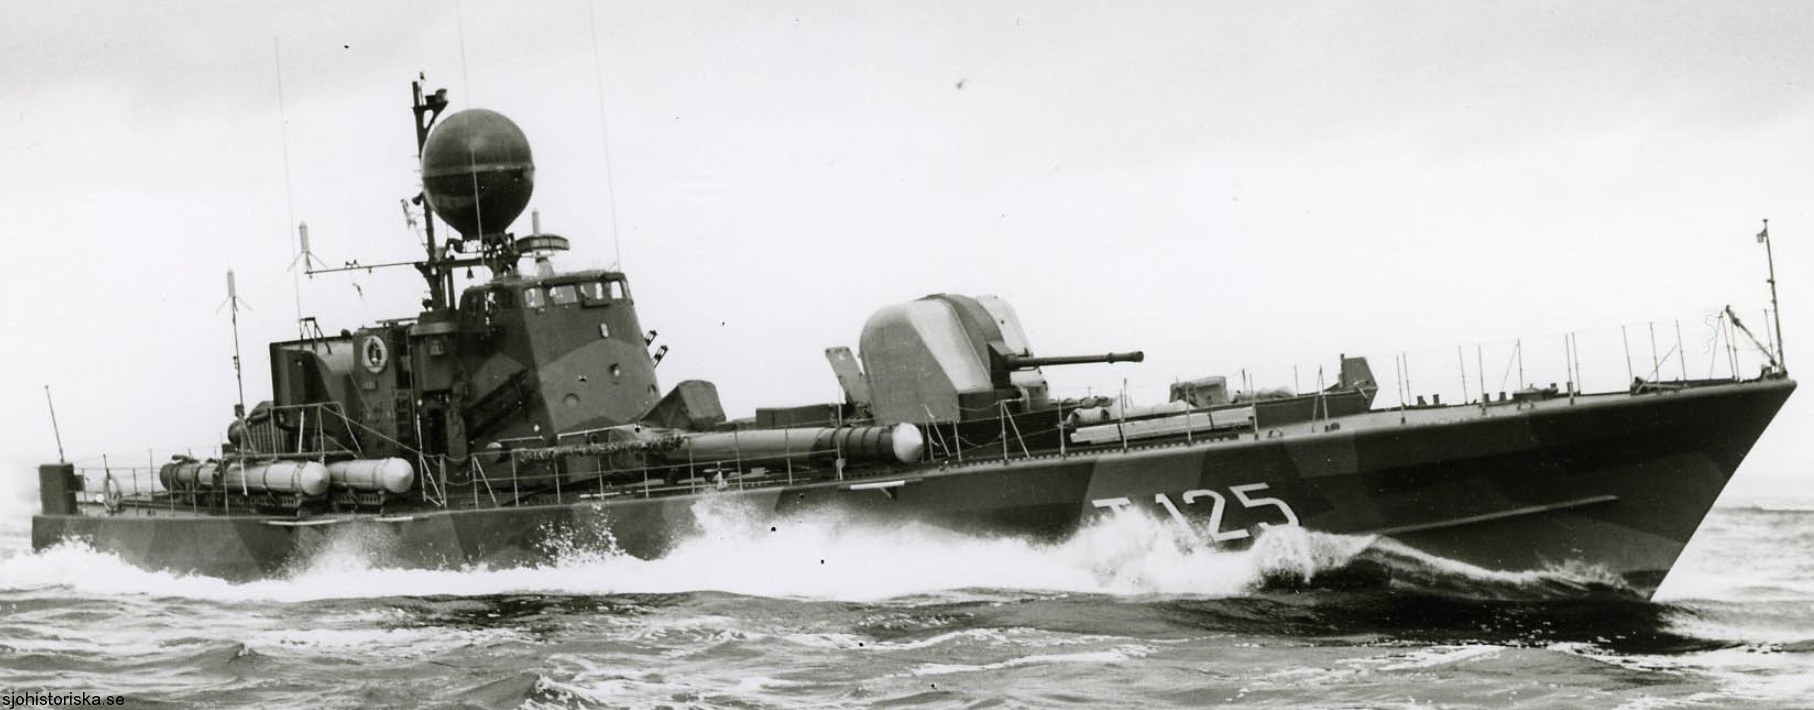 t125 vega hswms hms spica class fast attack craft torpedo boat vessel swedish navy svenska marinen 02